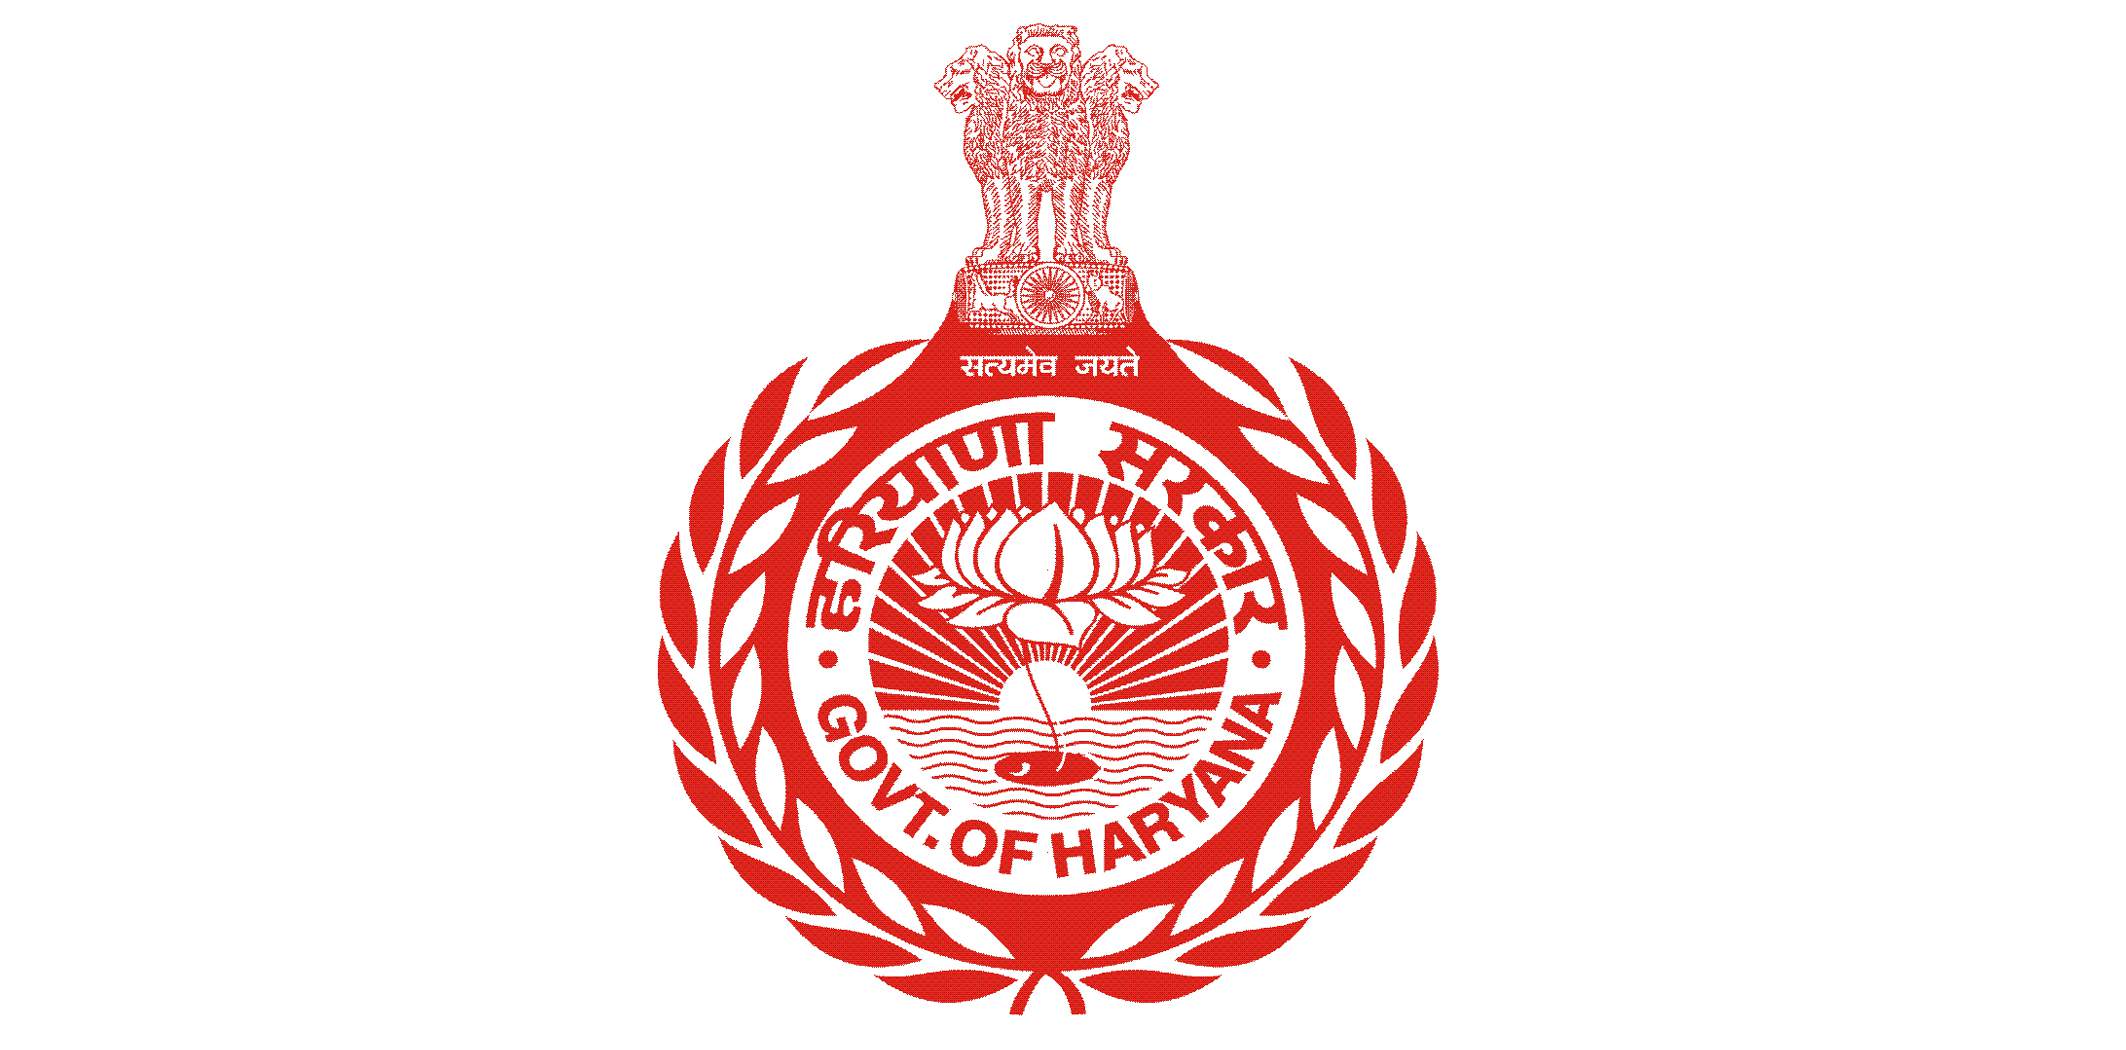 Haryana State Meritorious Incentives Scheme (CBSE)